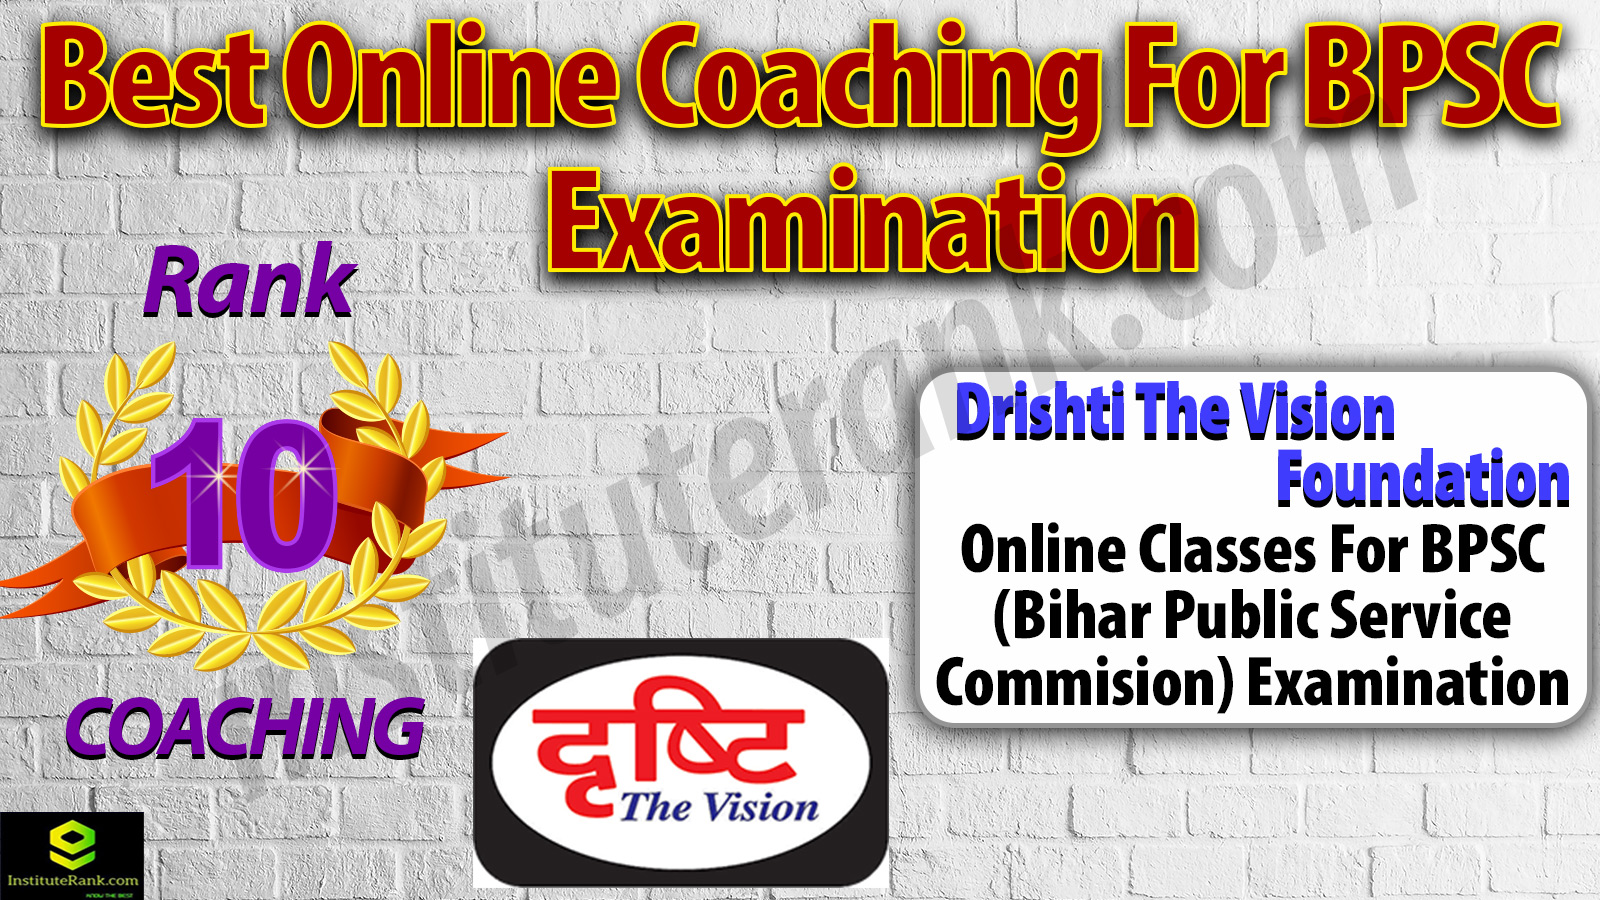 Online Coaching Centre for BPSC Exam Preparation